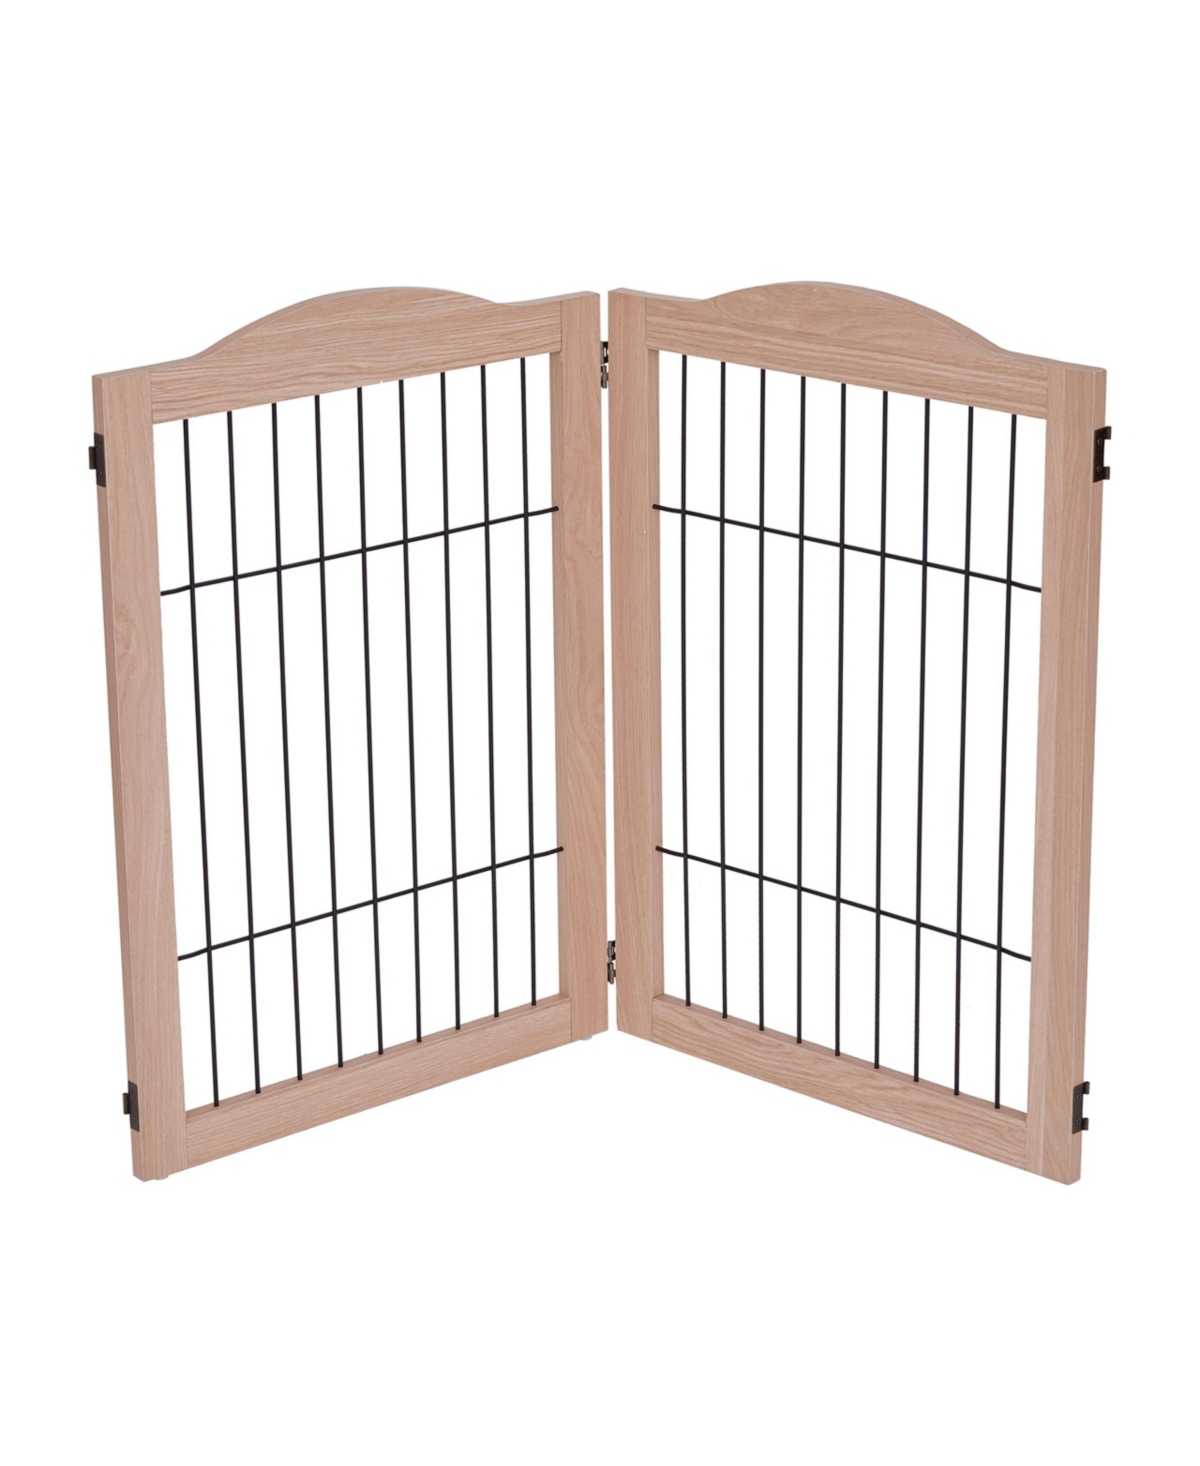 Freestanding Dog Gate, 2-Panel Extension - Walnut - Brown